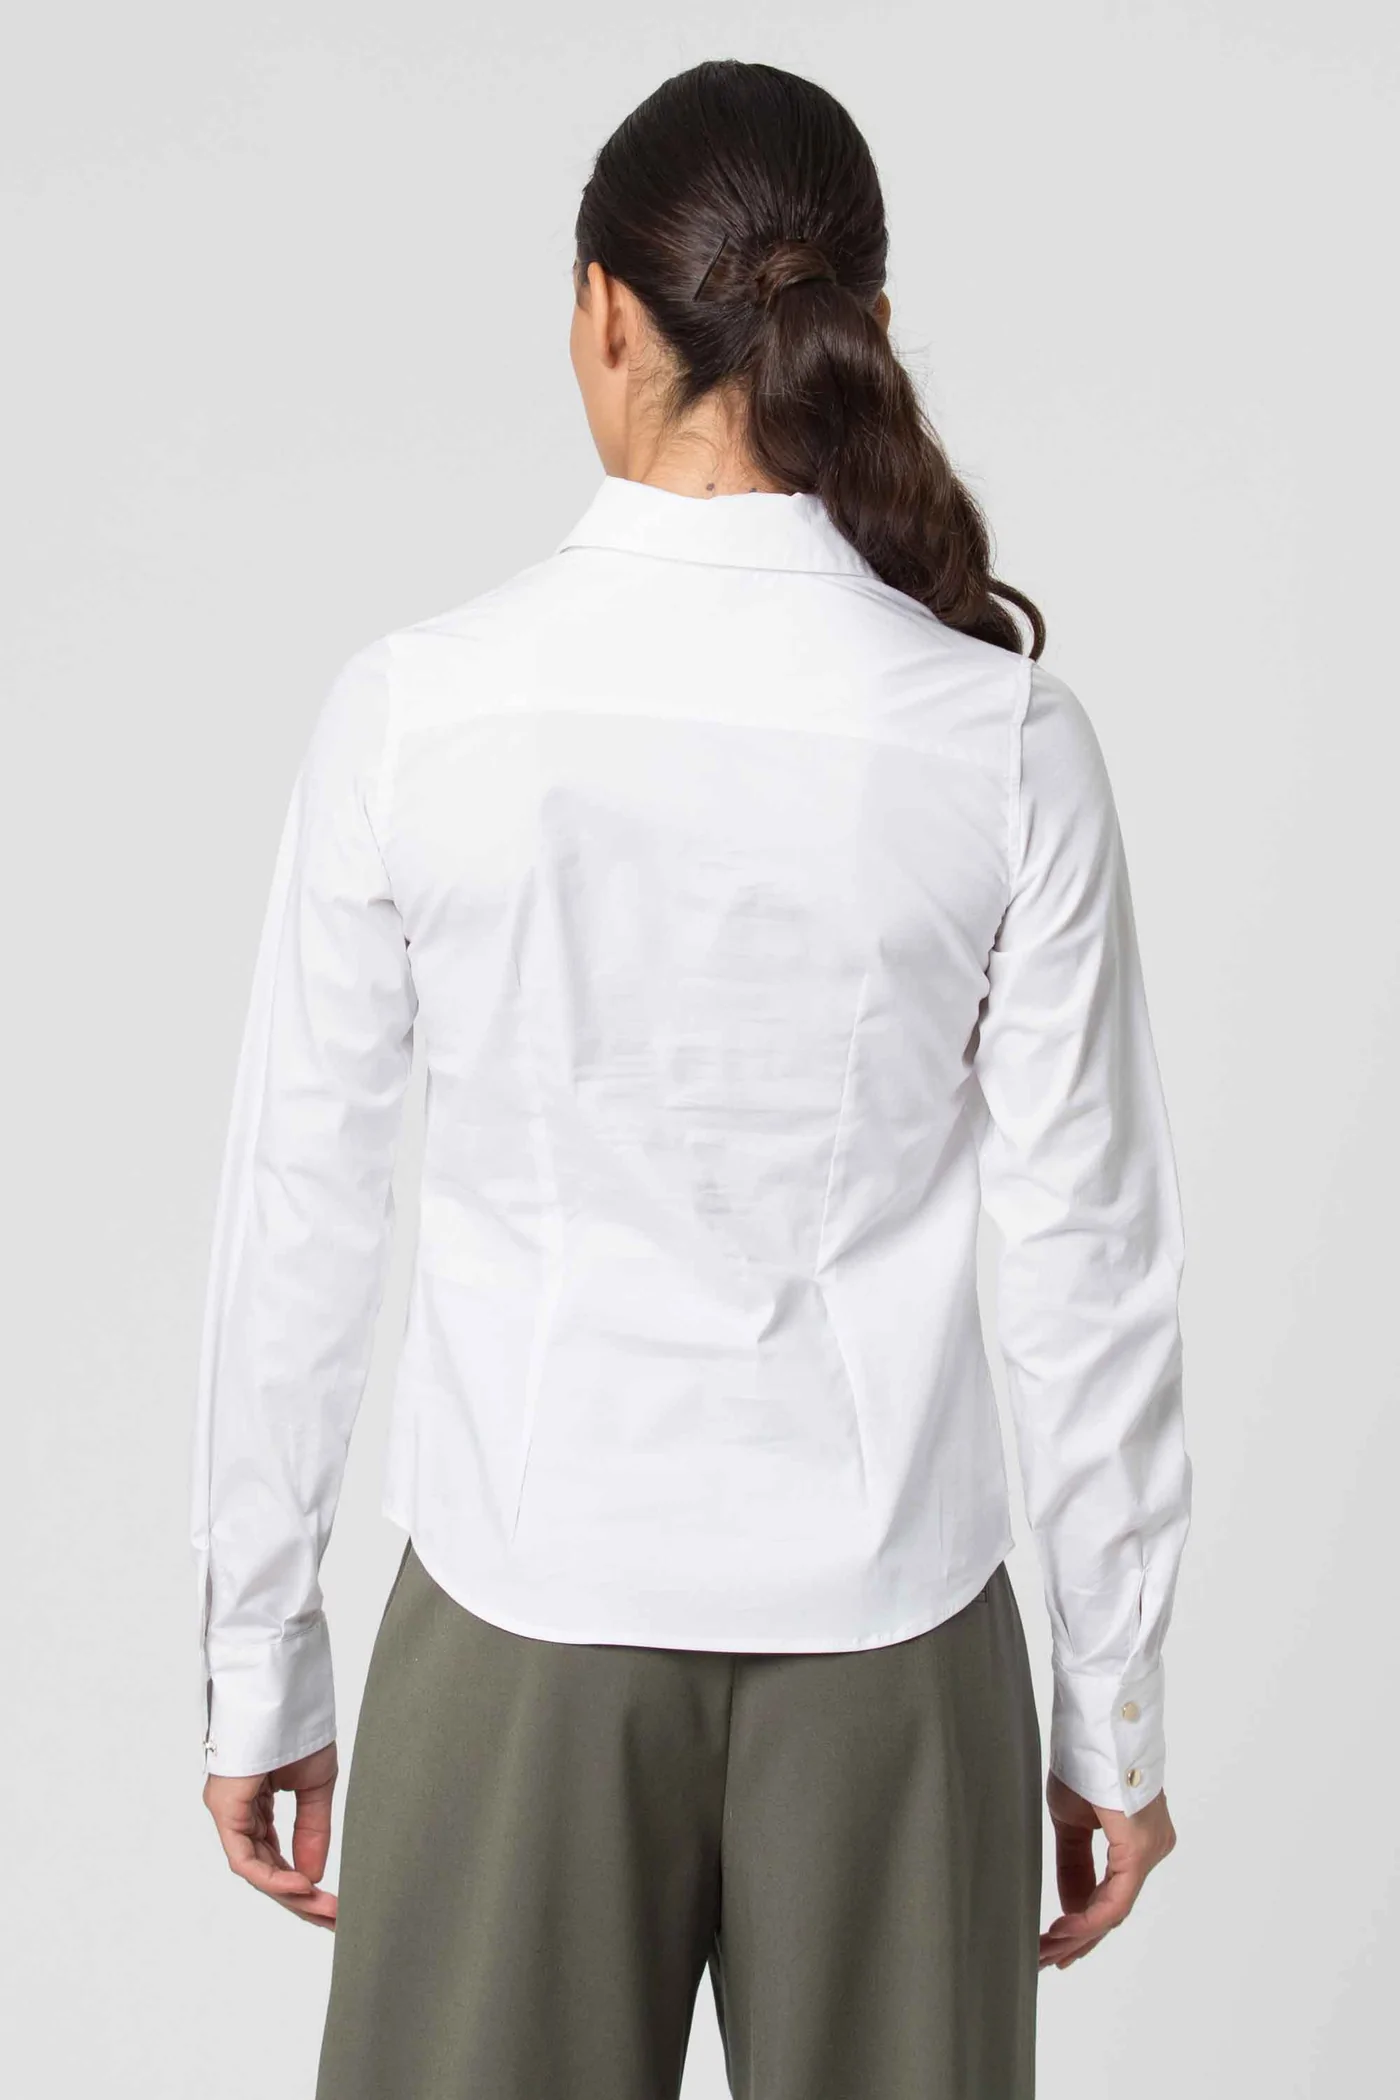 KOCCA camisa color blanco - 2